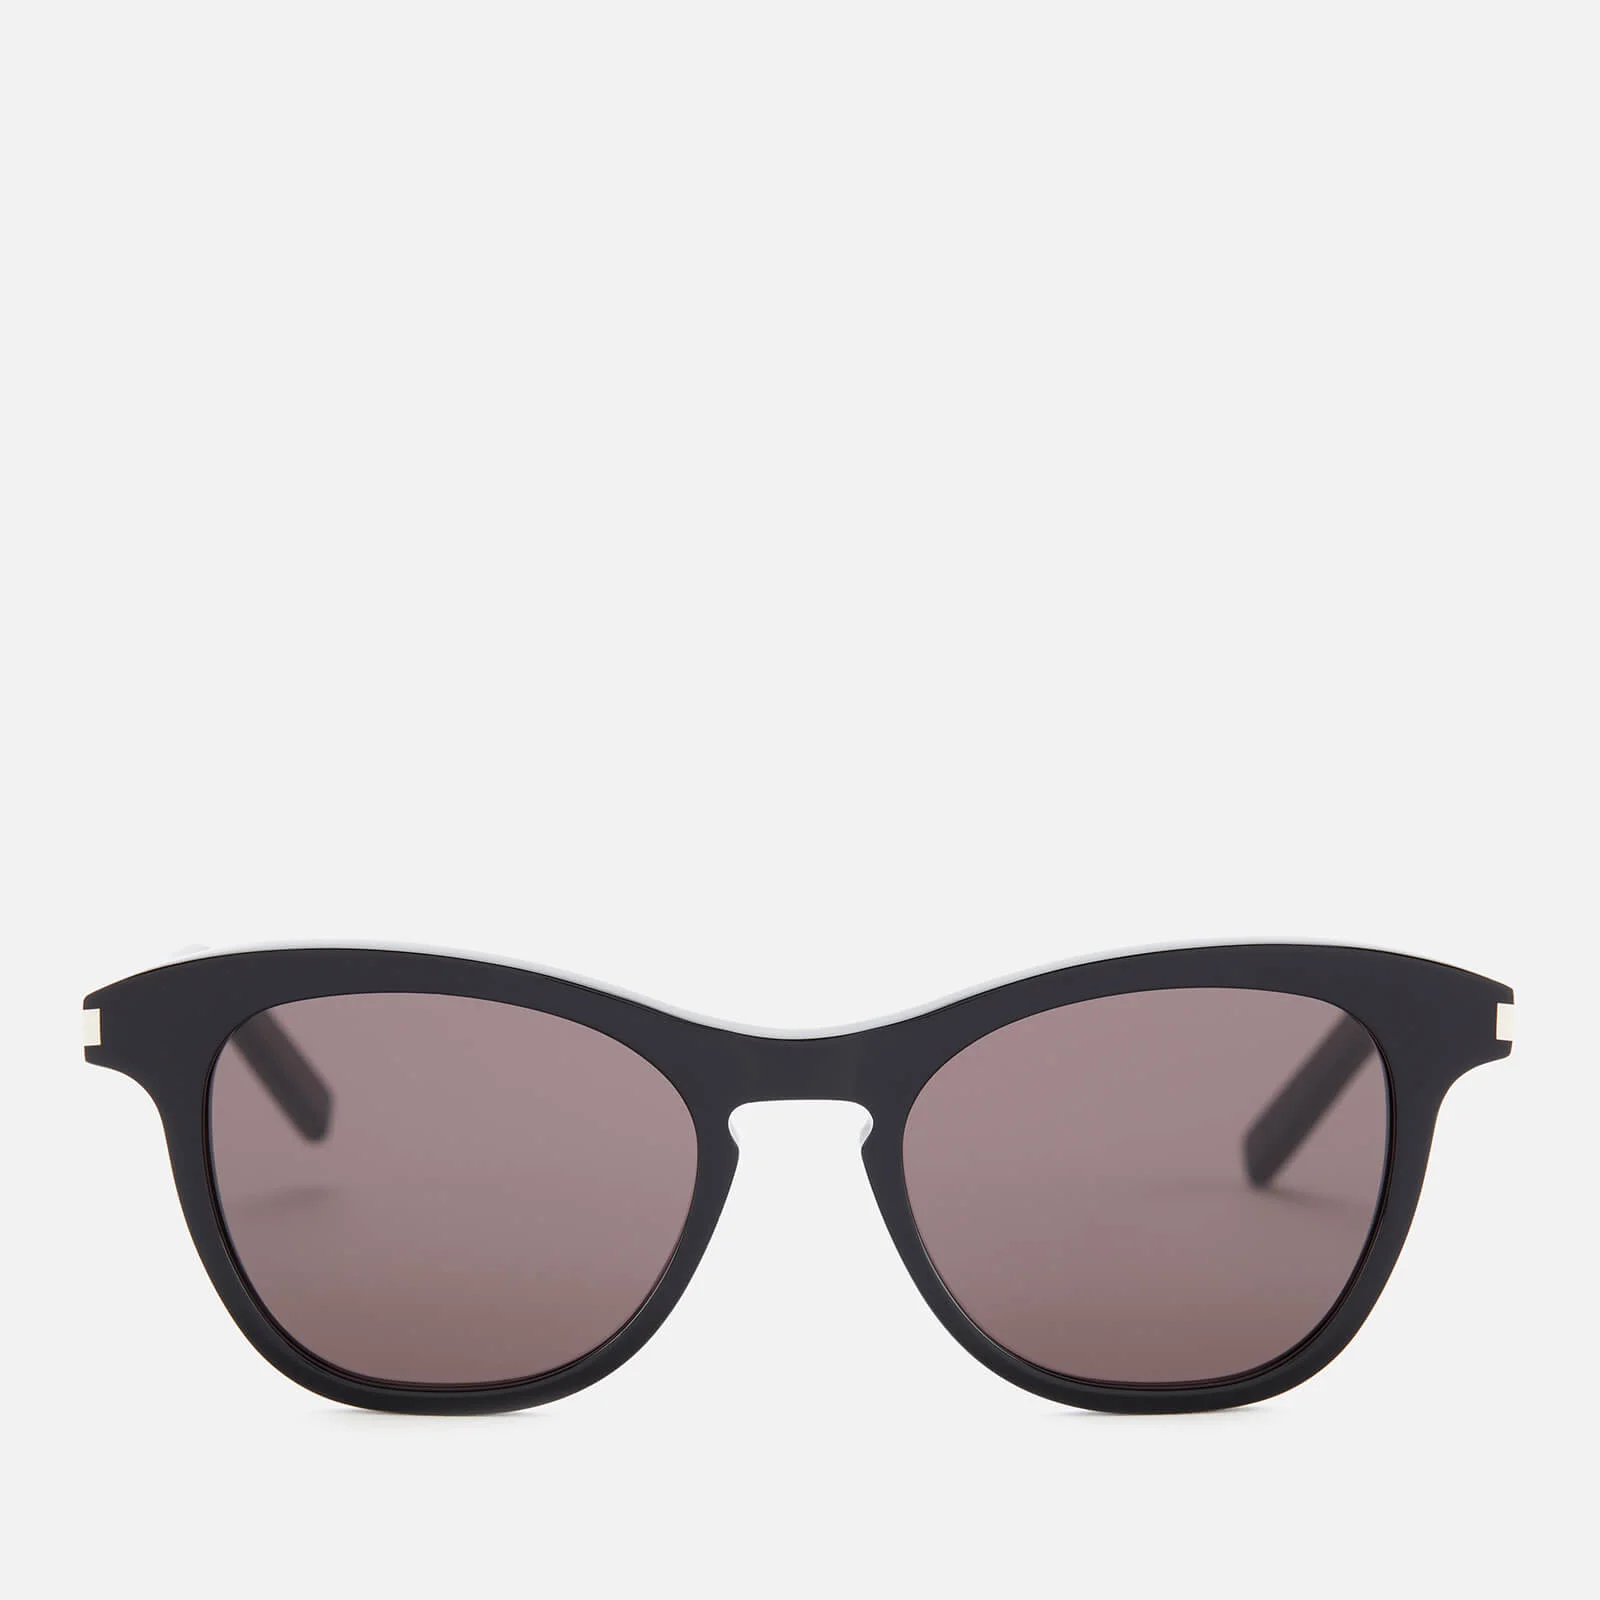 Saint Laurent Women's Oversized Acetate Sunglasses - Black Image 1